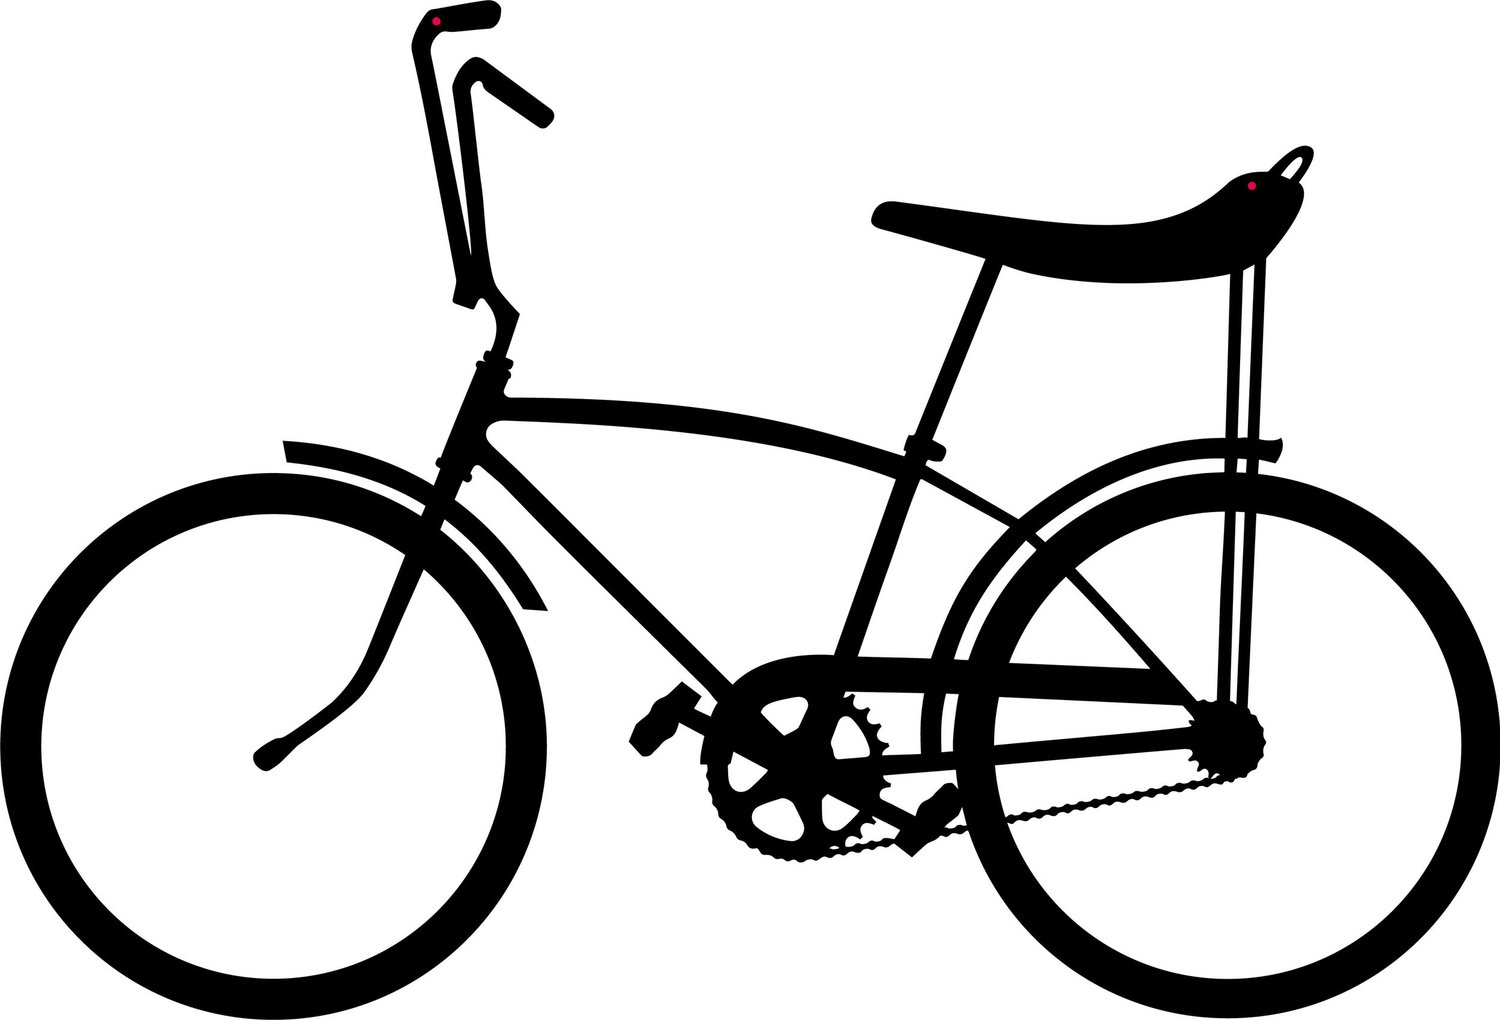 Joyride Bikes